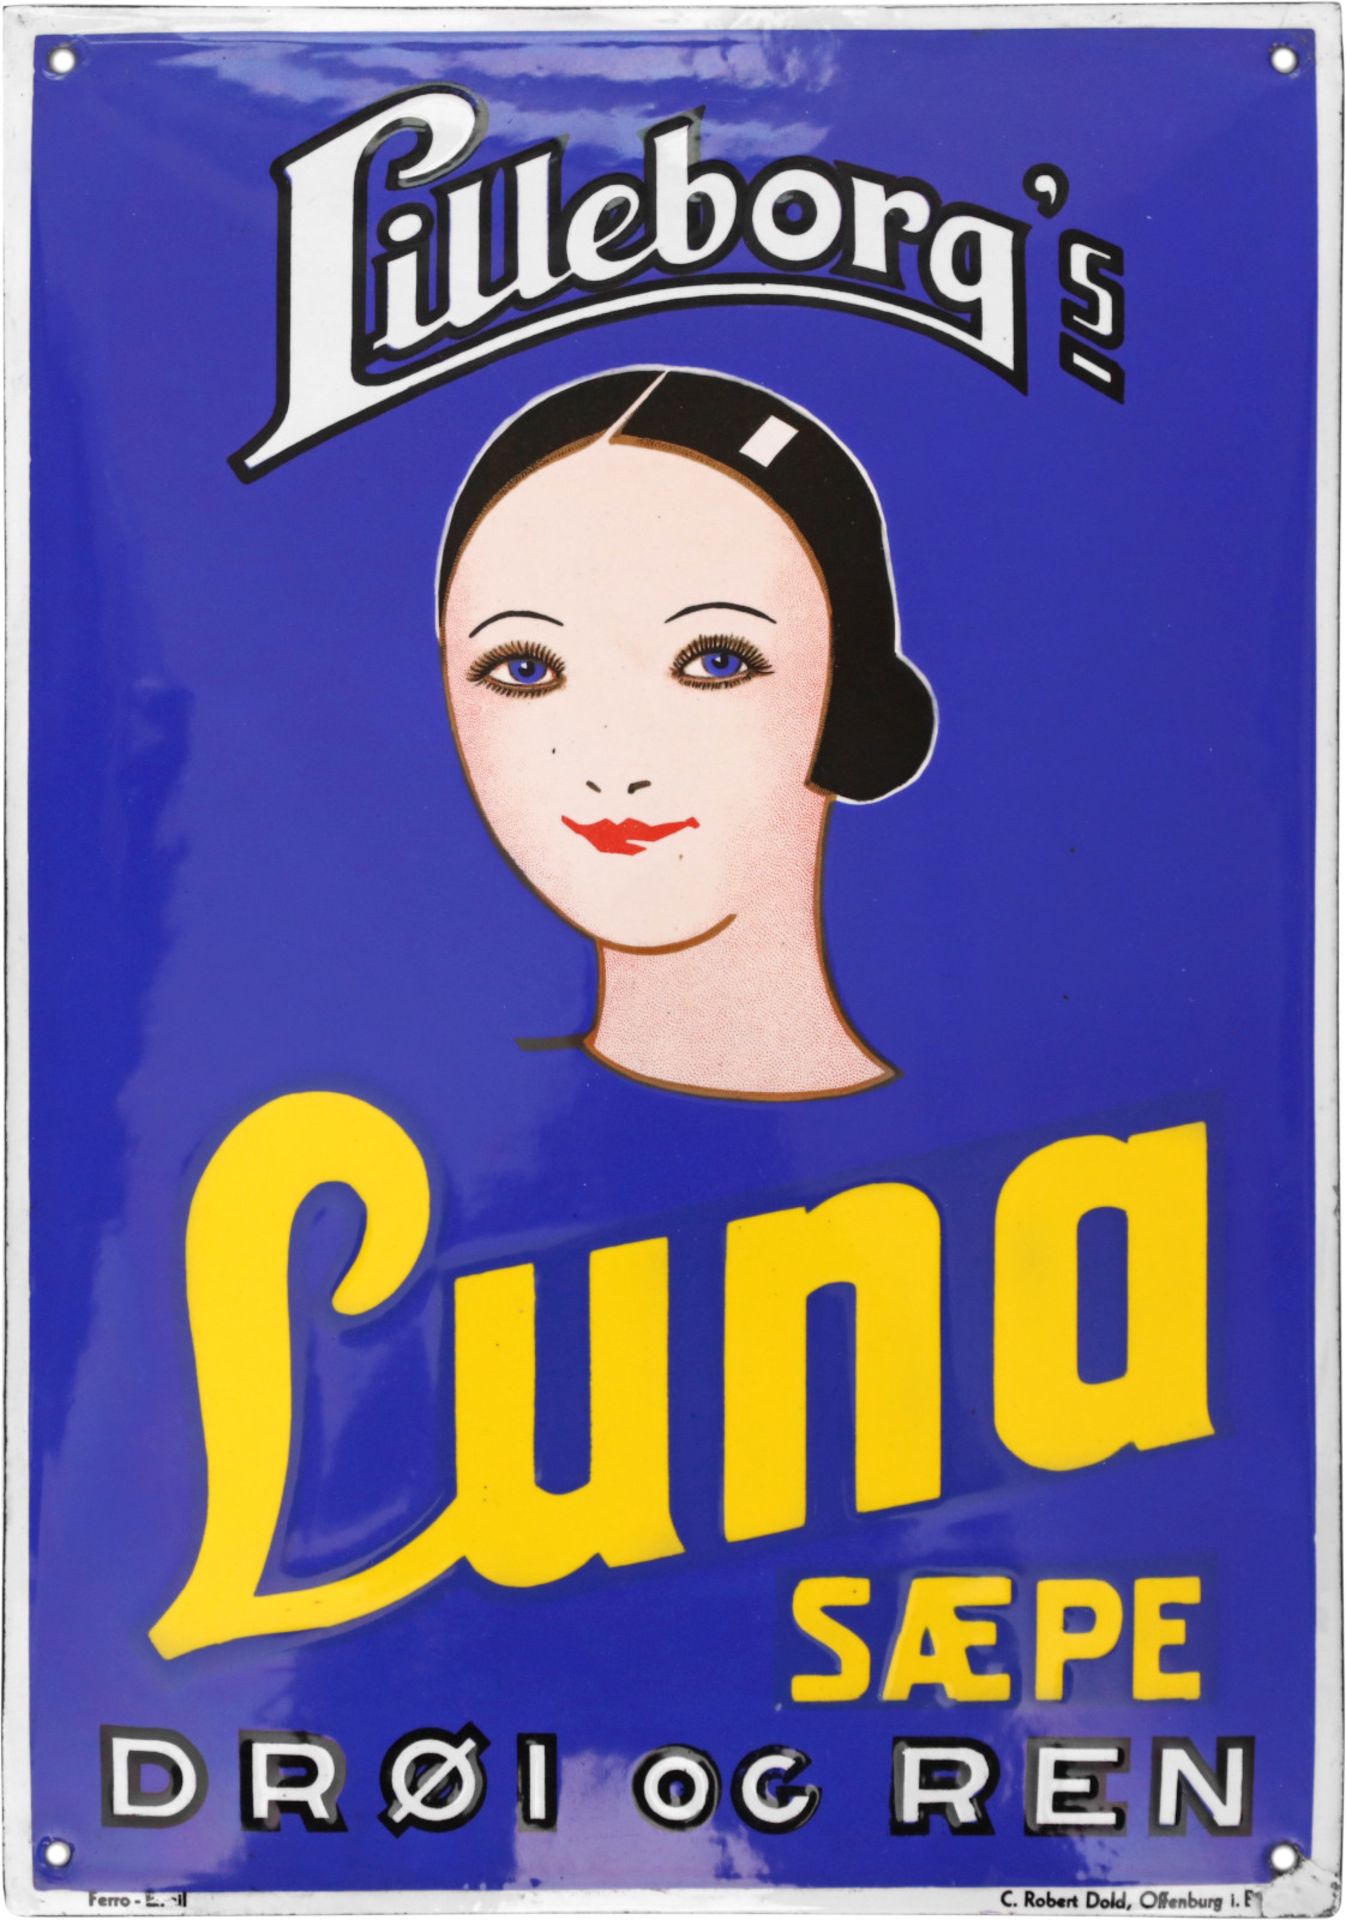 Enamel sign Lilleborg's Luna Saepe in dream condition! Norway around 1930